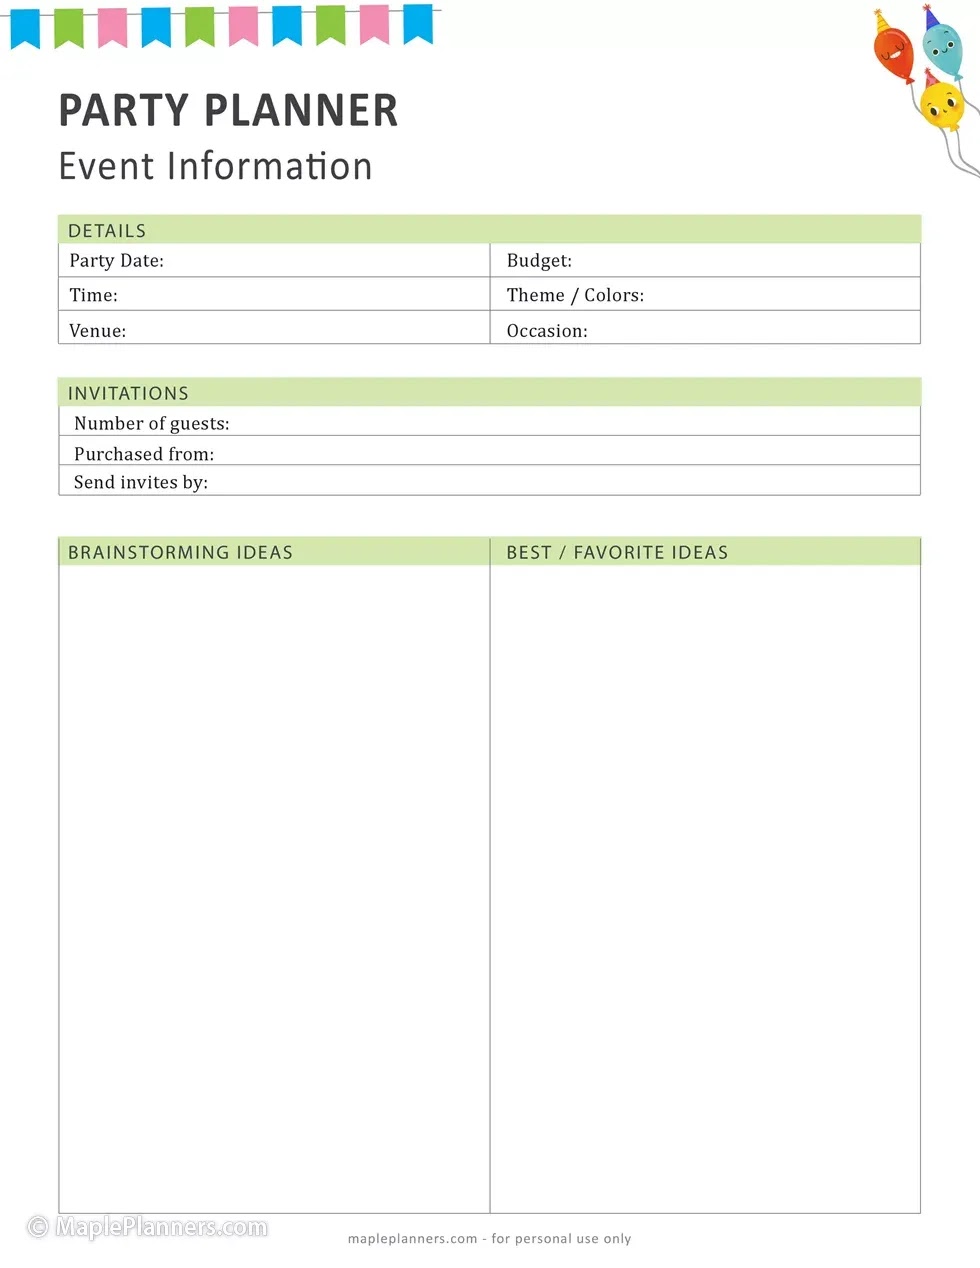 Party Planner Event Details